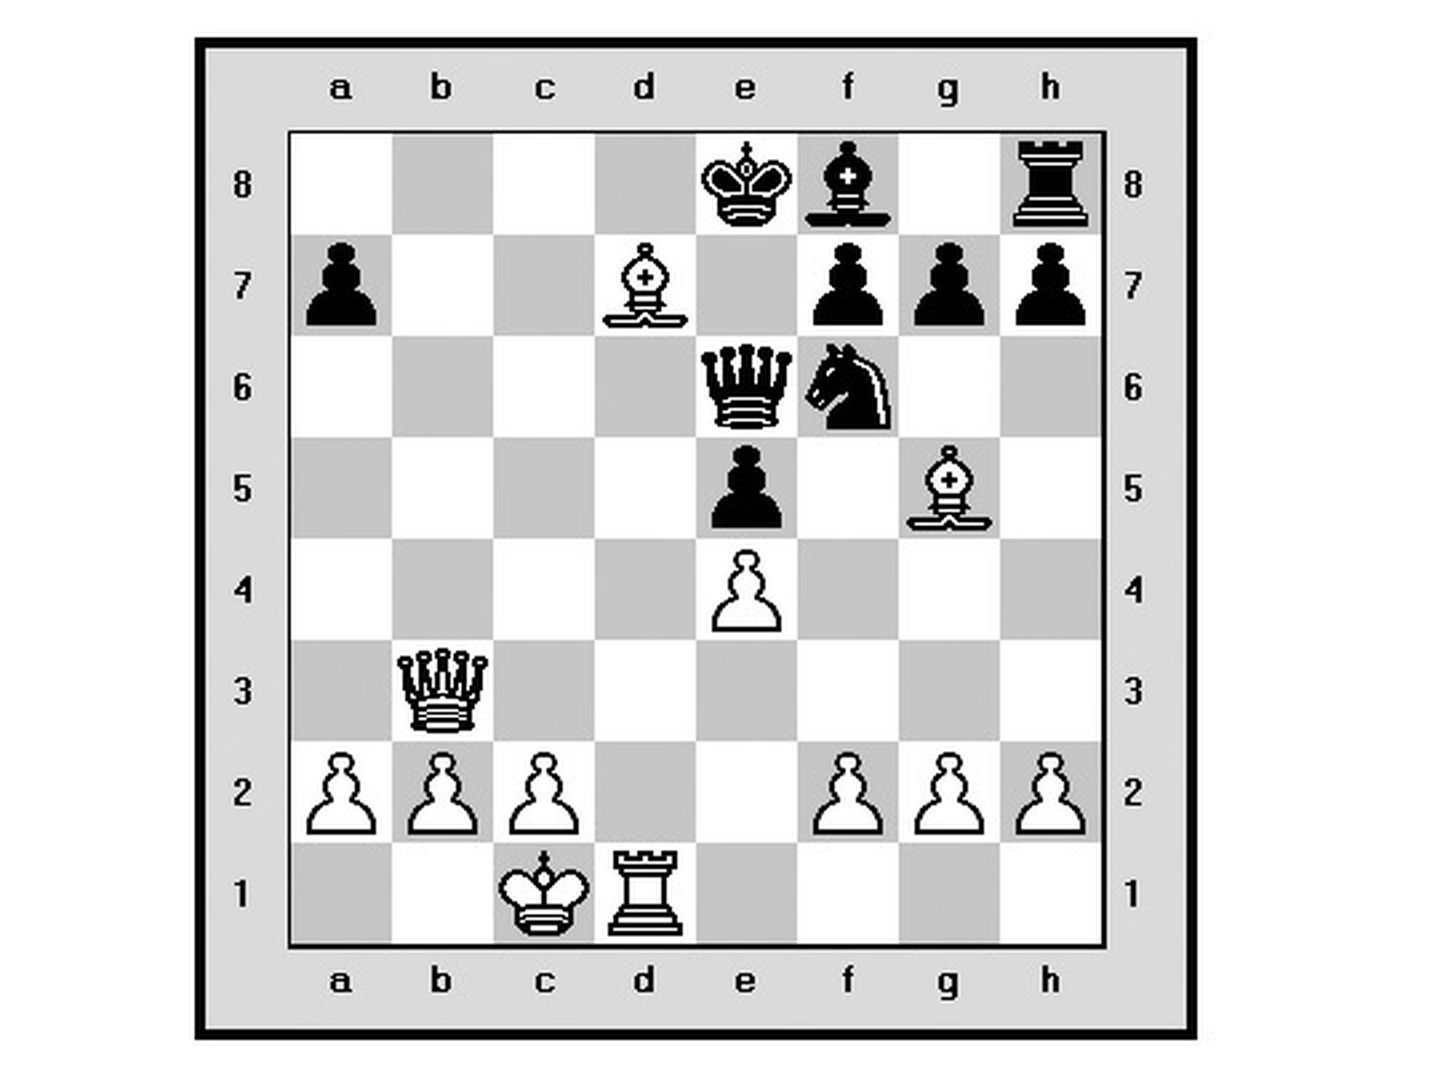 Paul Morphy, una vida de ajedrez e insania muy por encima de